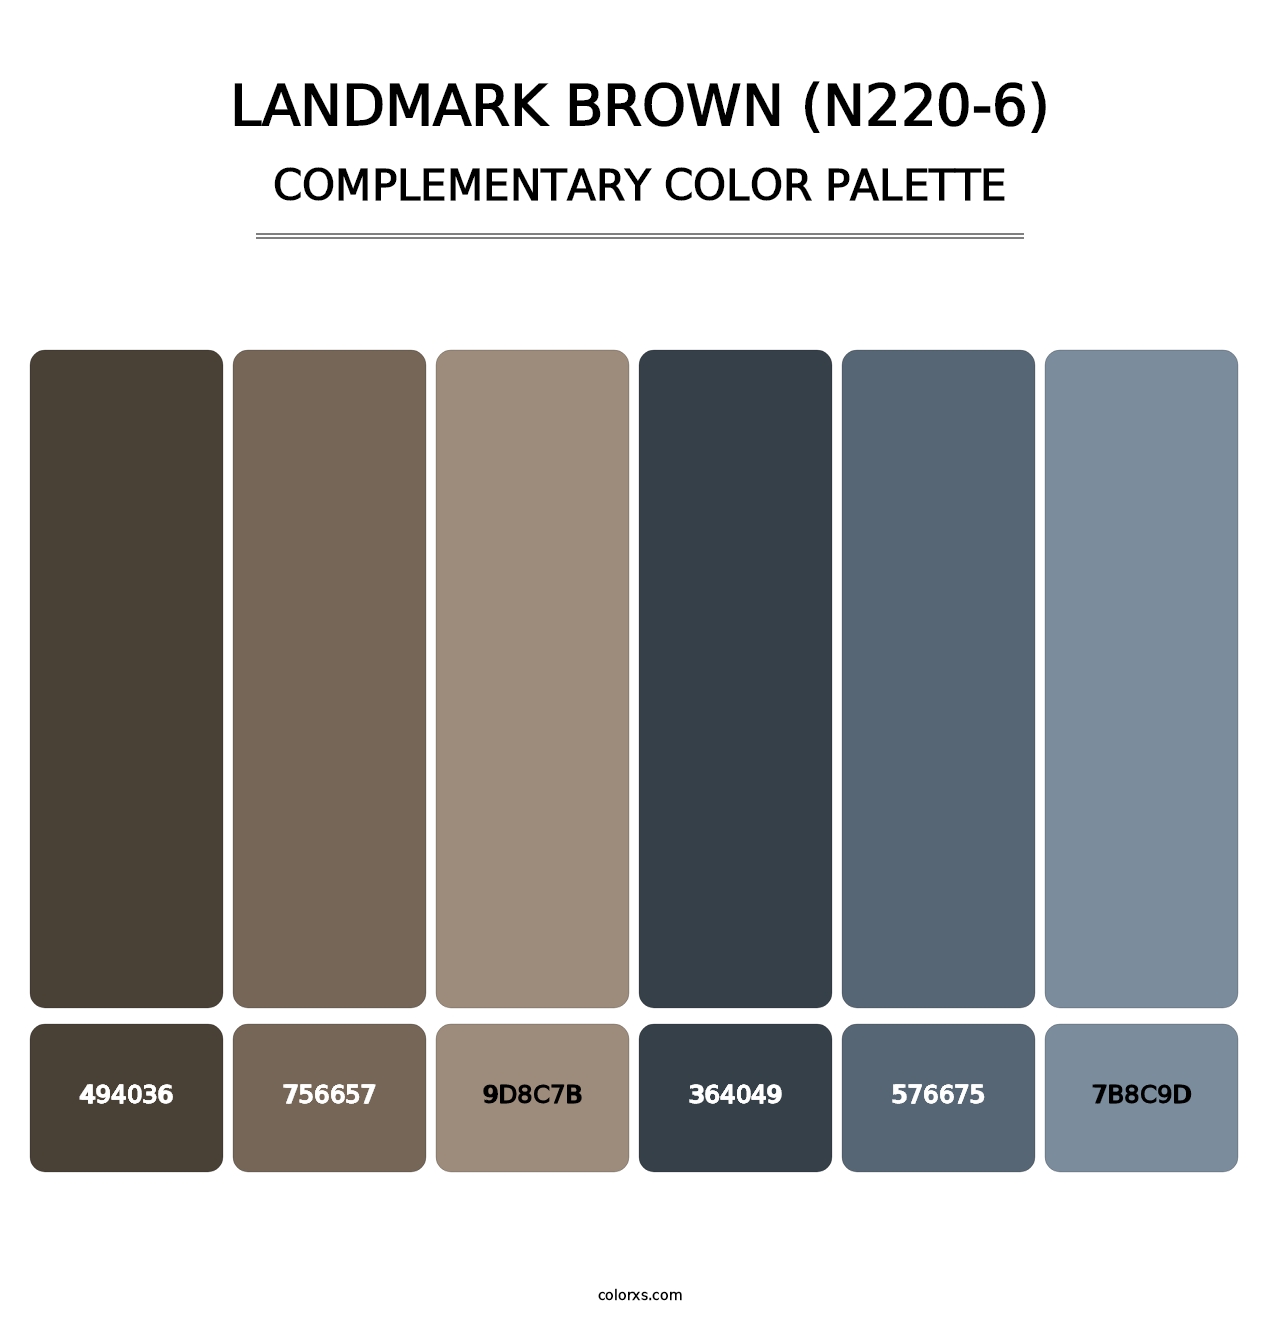 Landmark Brown (N220-6) - Complementary Color Palette